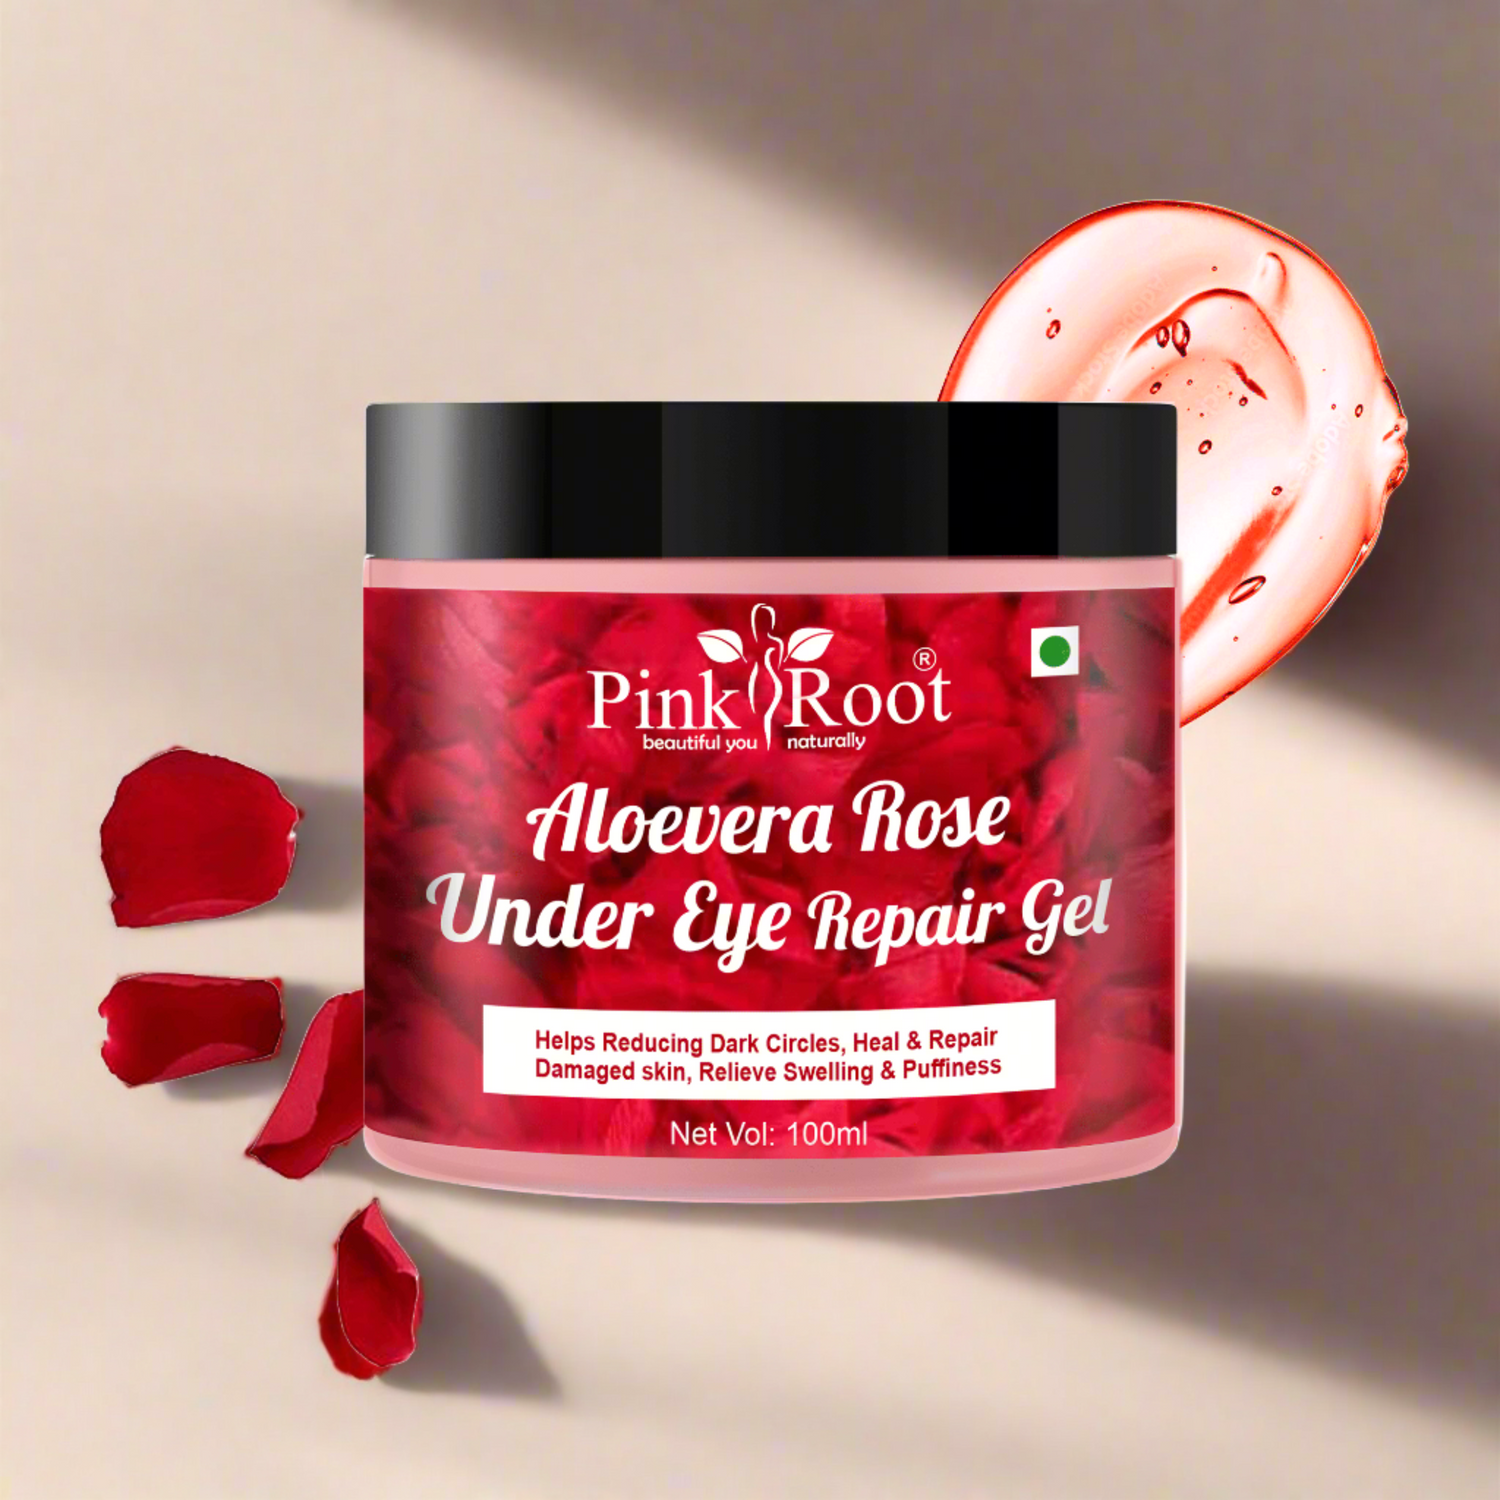 Pink Root Aloevera Rose Under Eye Gel 100ml, helps reduce dark circles, soothe puffy eyes, brighten the under-eye area & tighten the skin - Pink Root